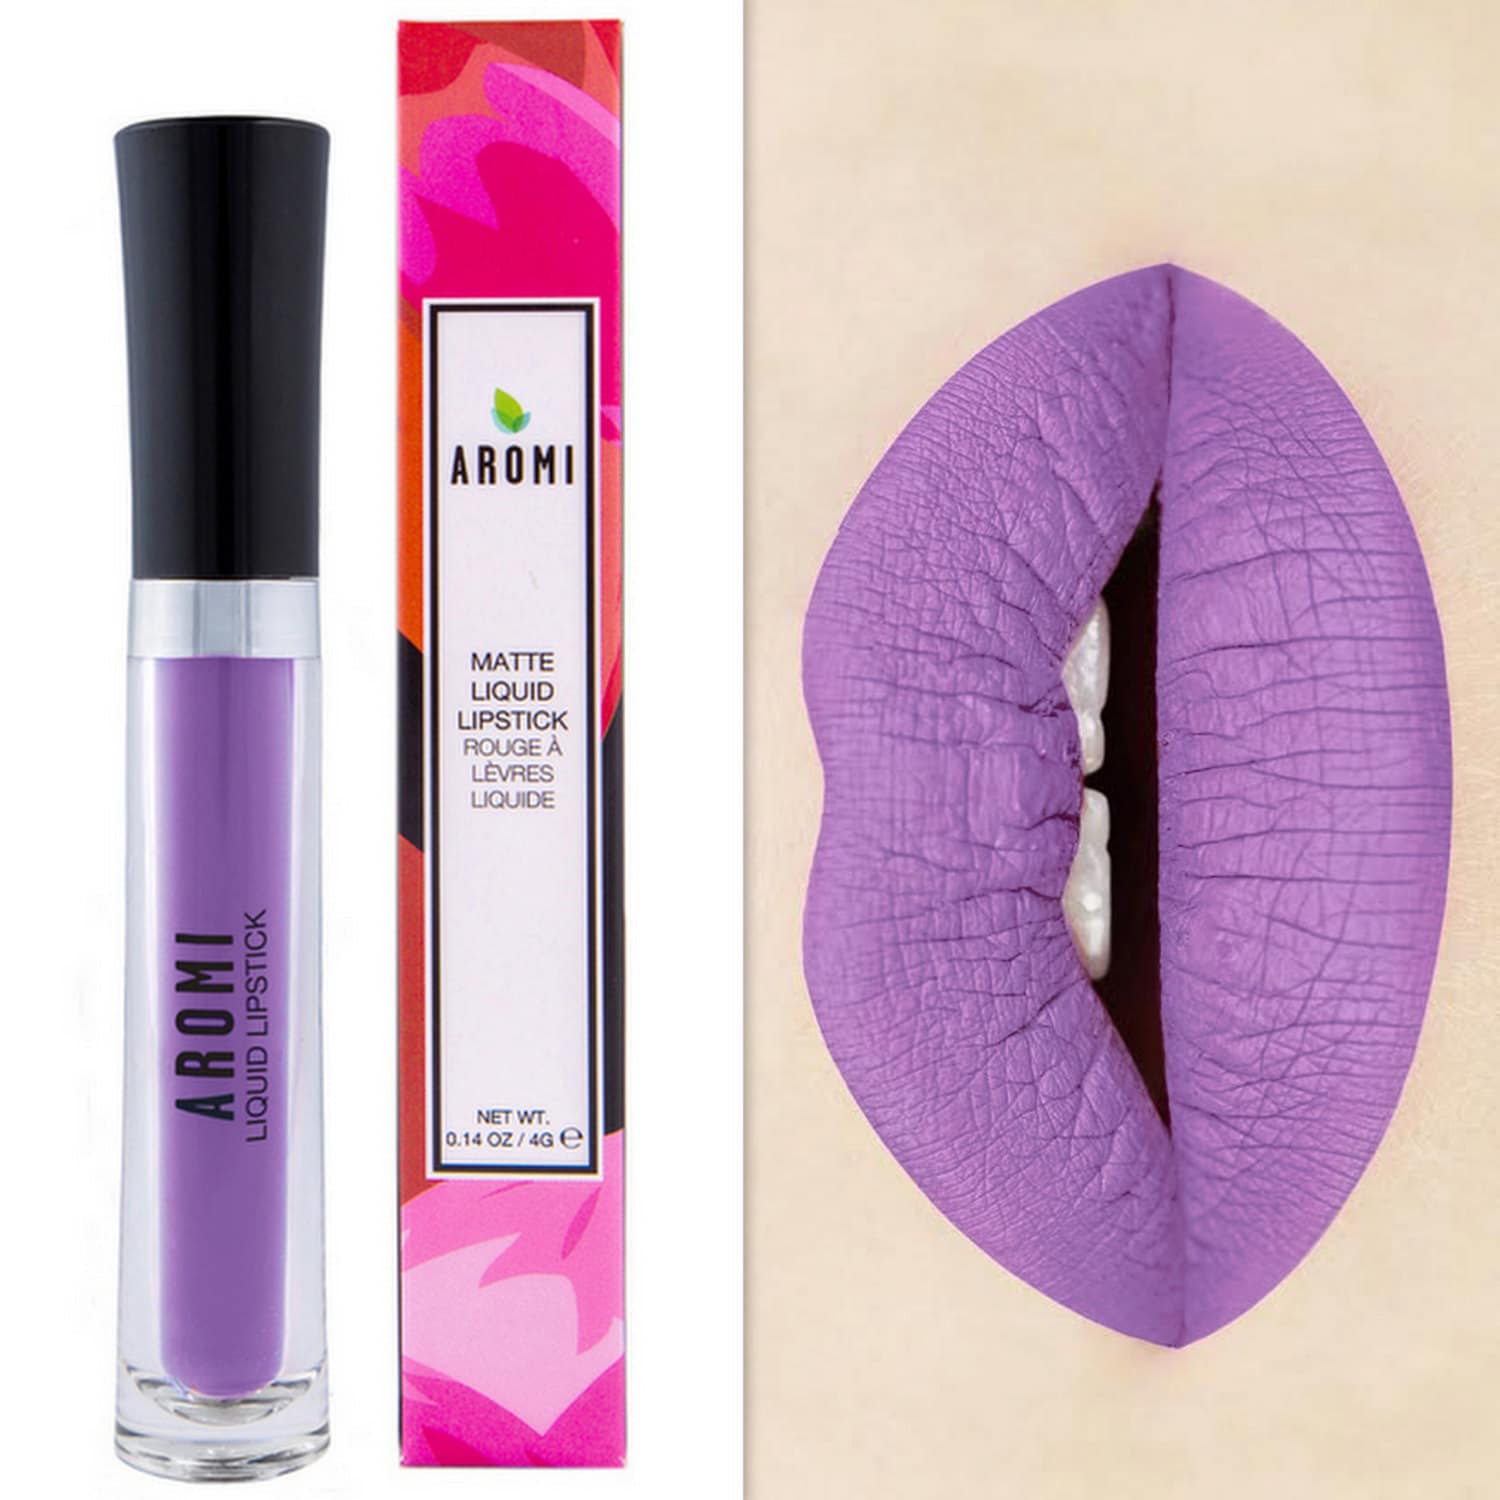 Lavender Fields Matte Liquid Lipstick. Purple. Glossy to